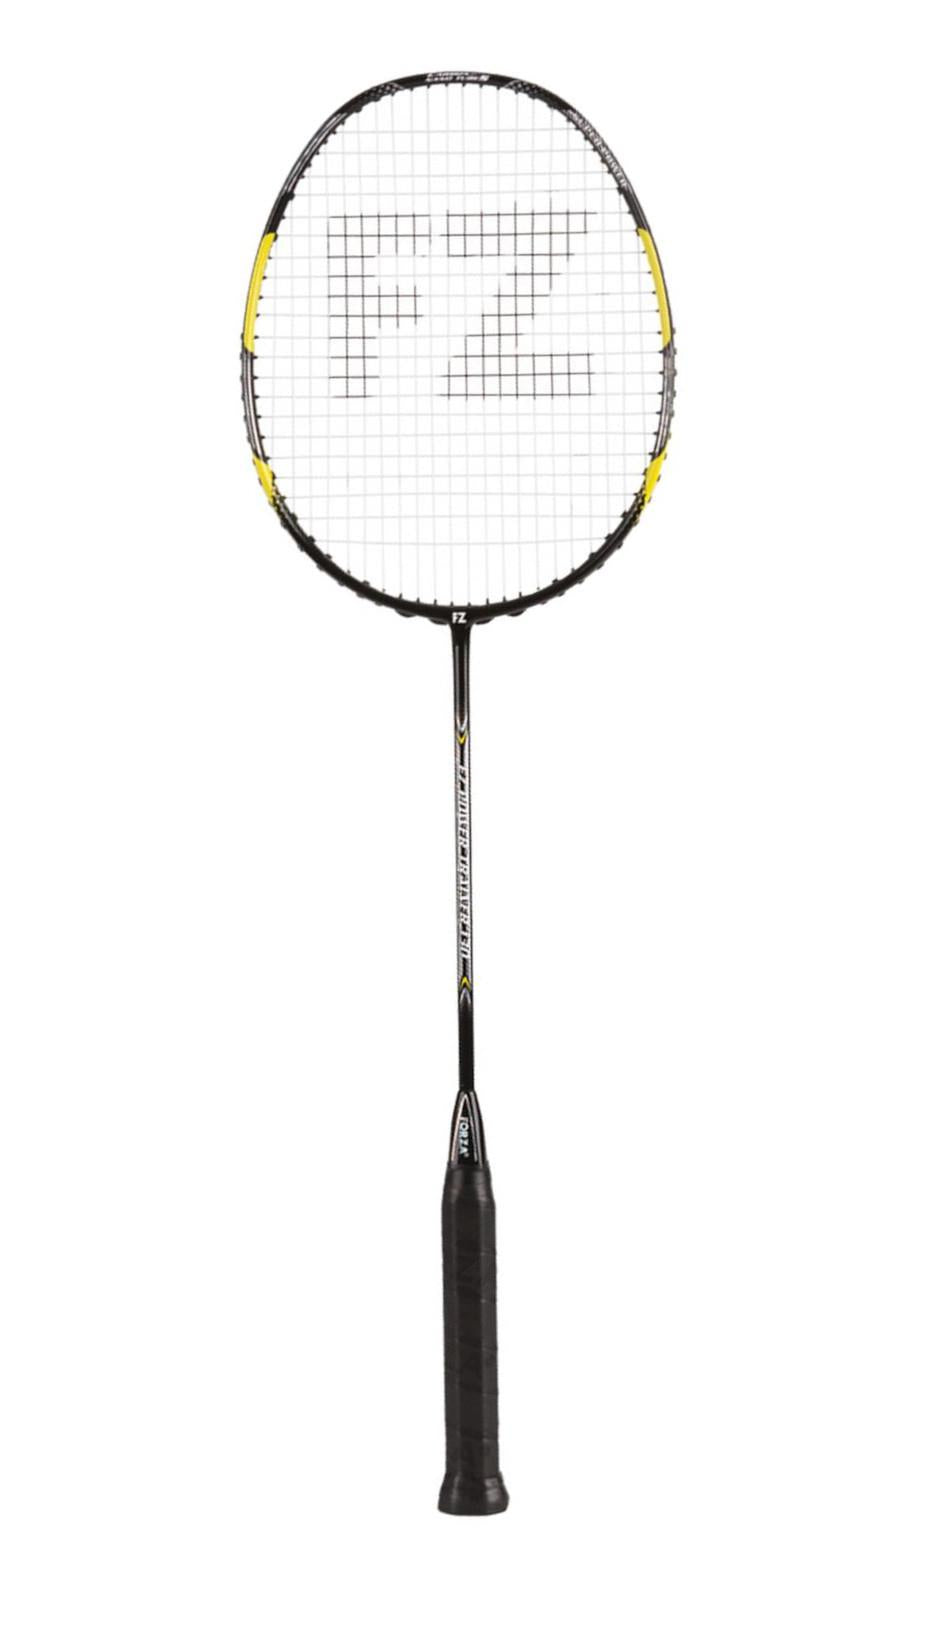 FZ Forza Power Trainer 130 Badminton Racket - Black/Yellow